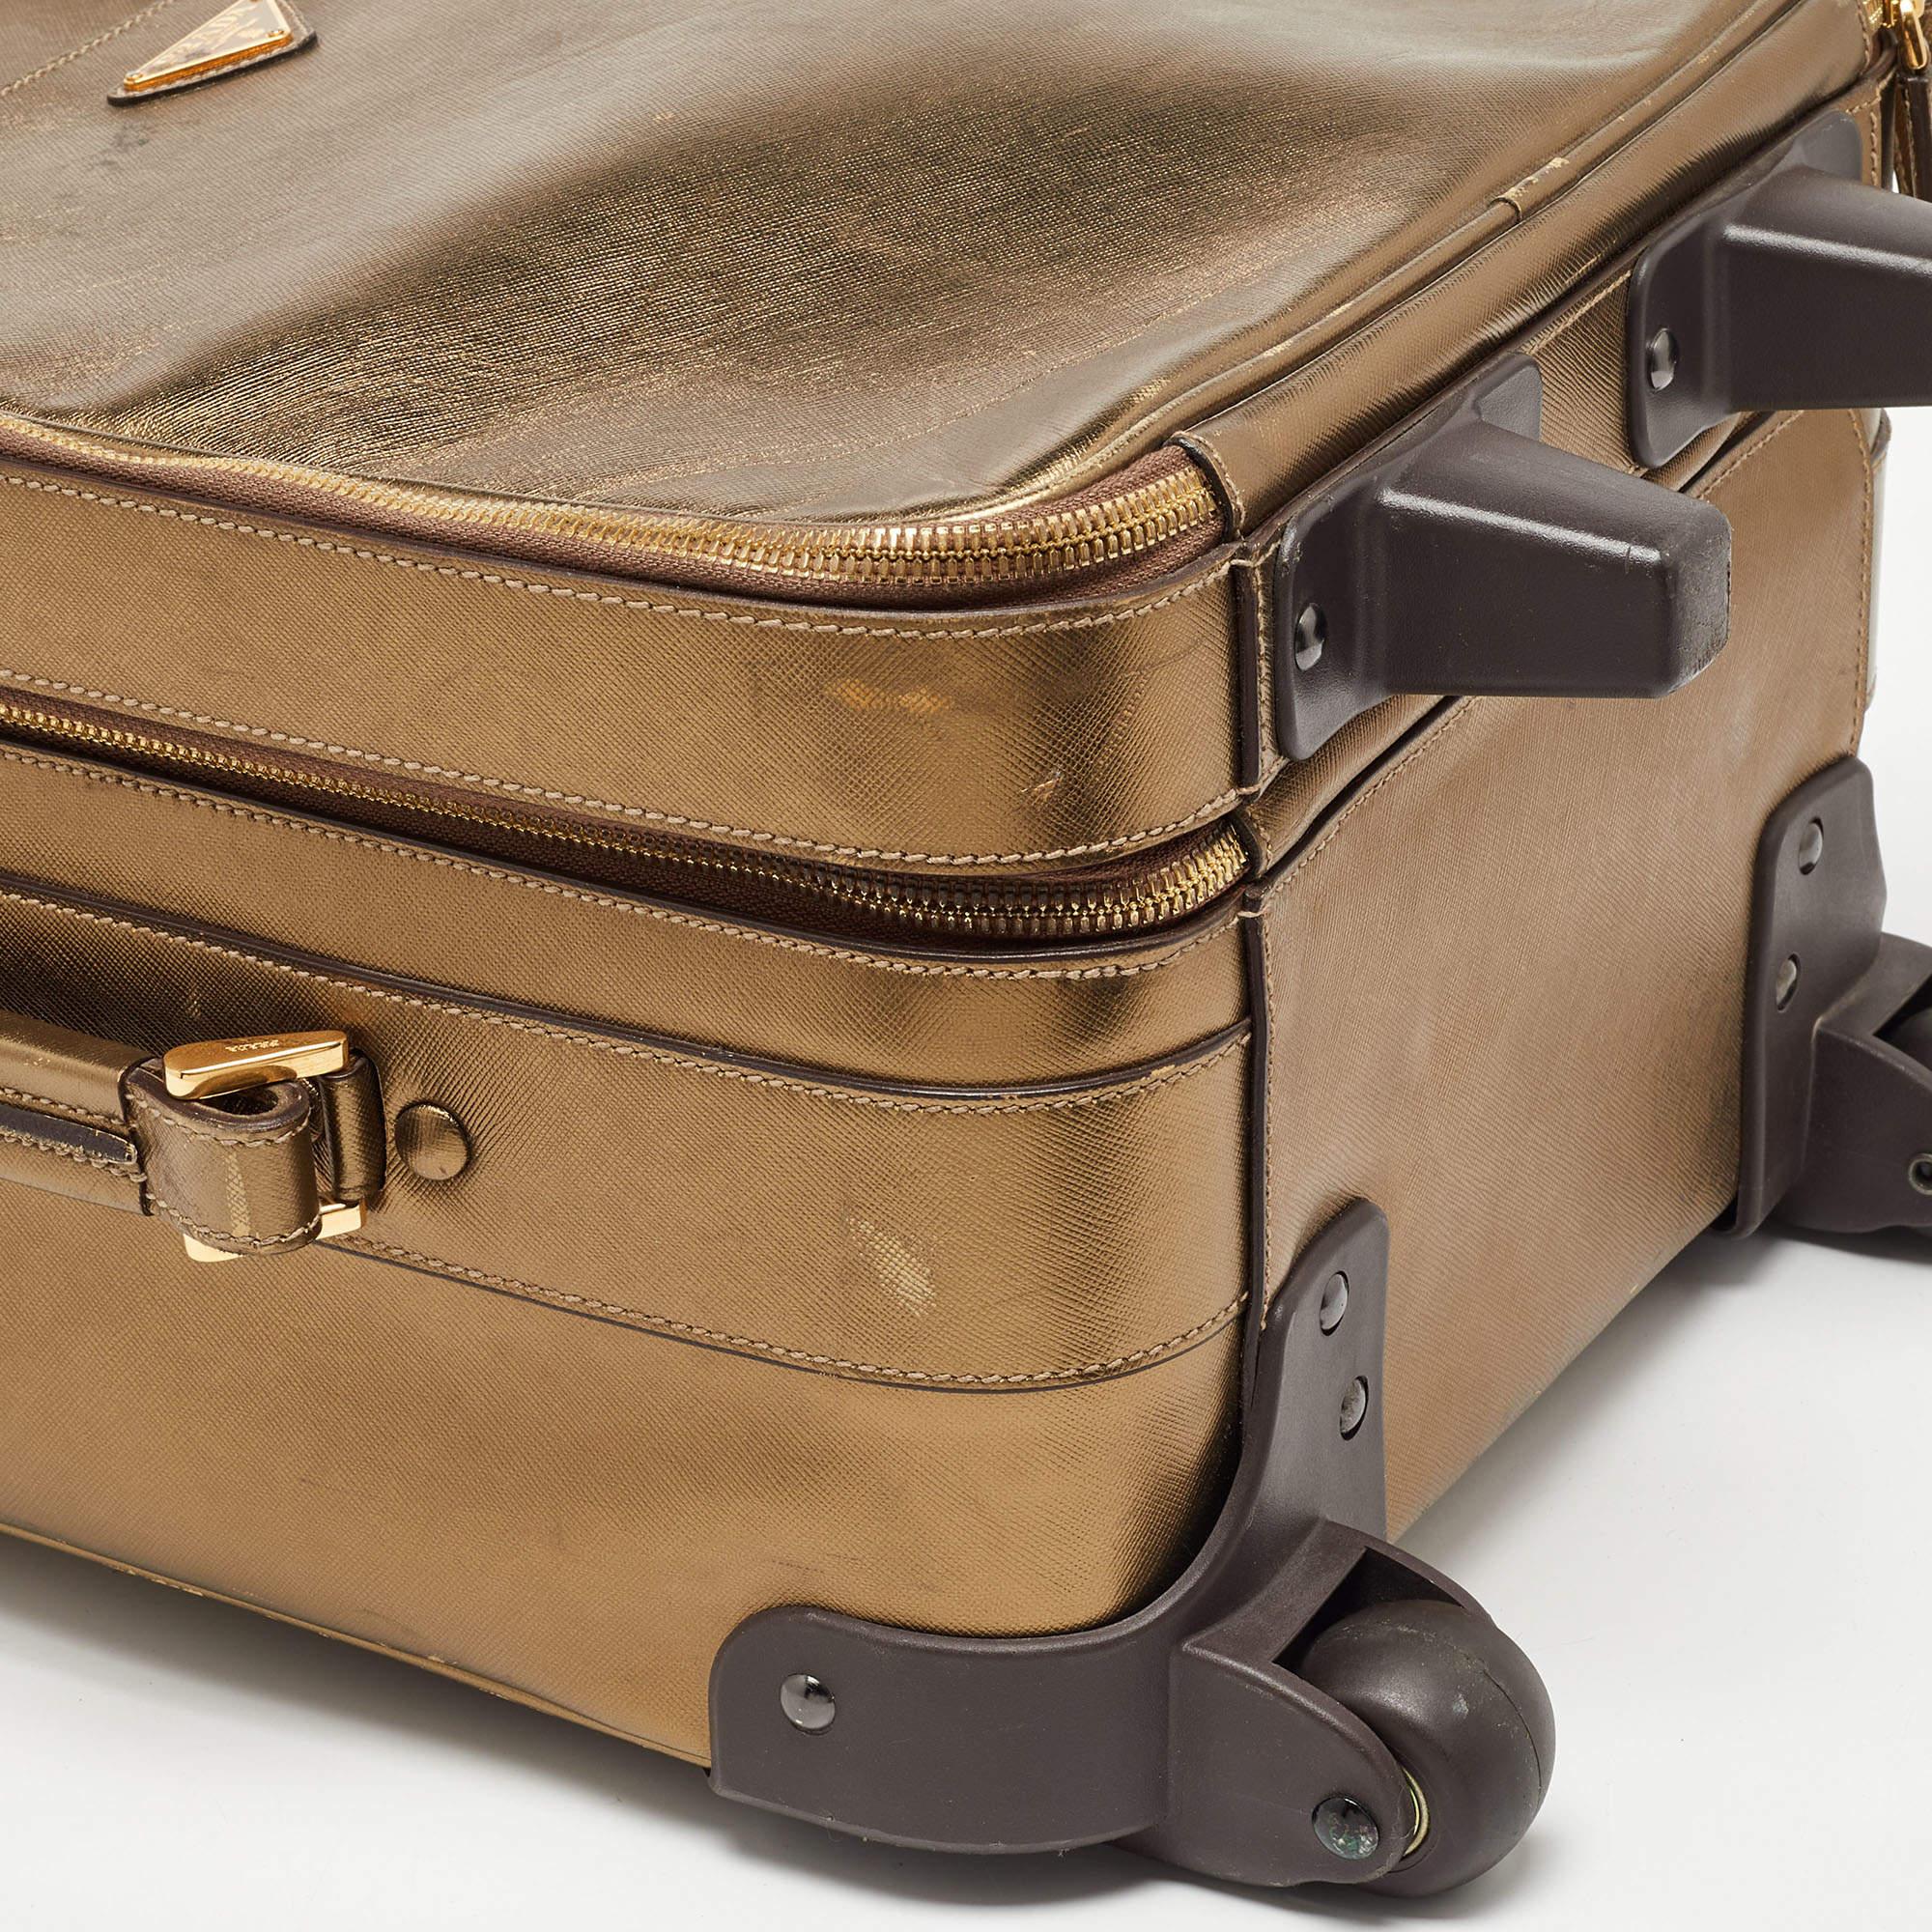 Prada Metallic Gold Saffiano Leather Travel Rolling Trolley Luggage 5